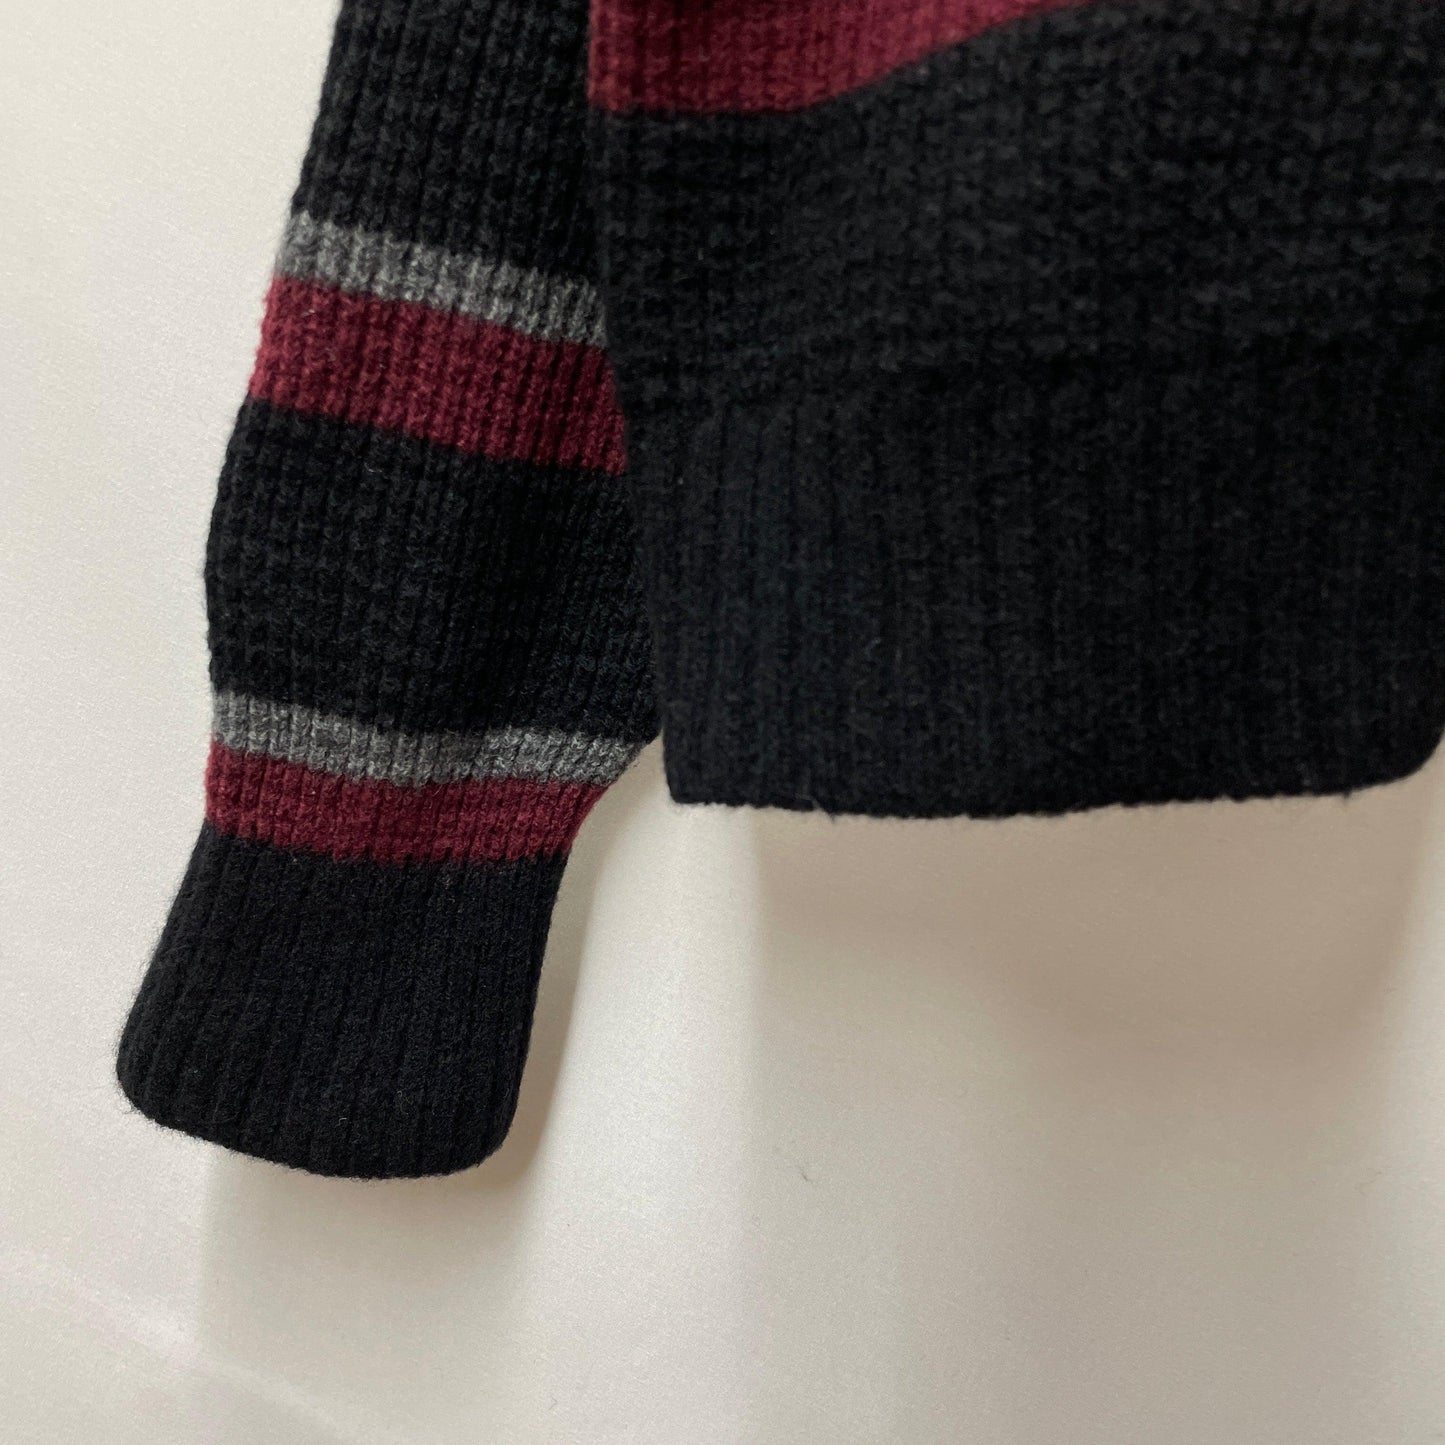 Burberry knit striped turtleneck